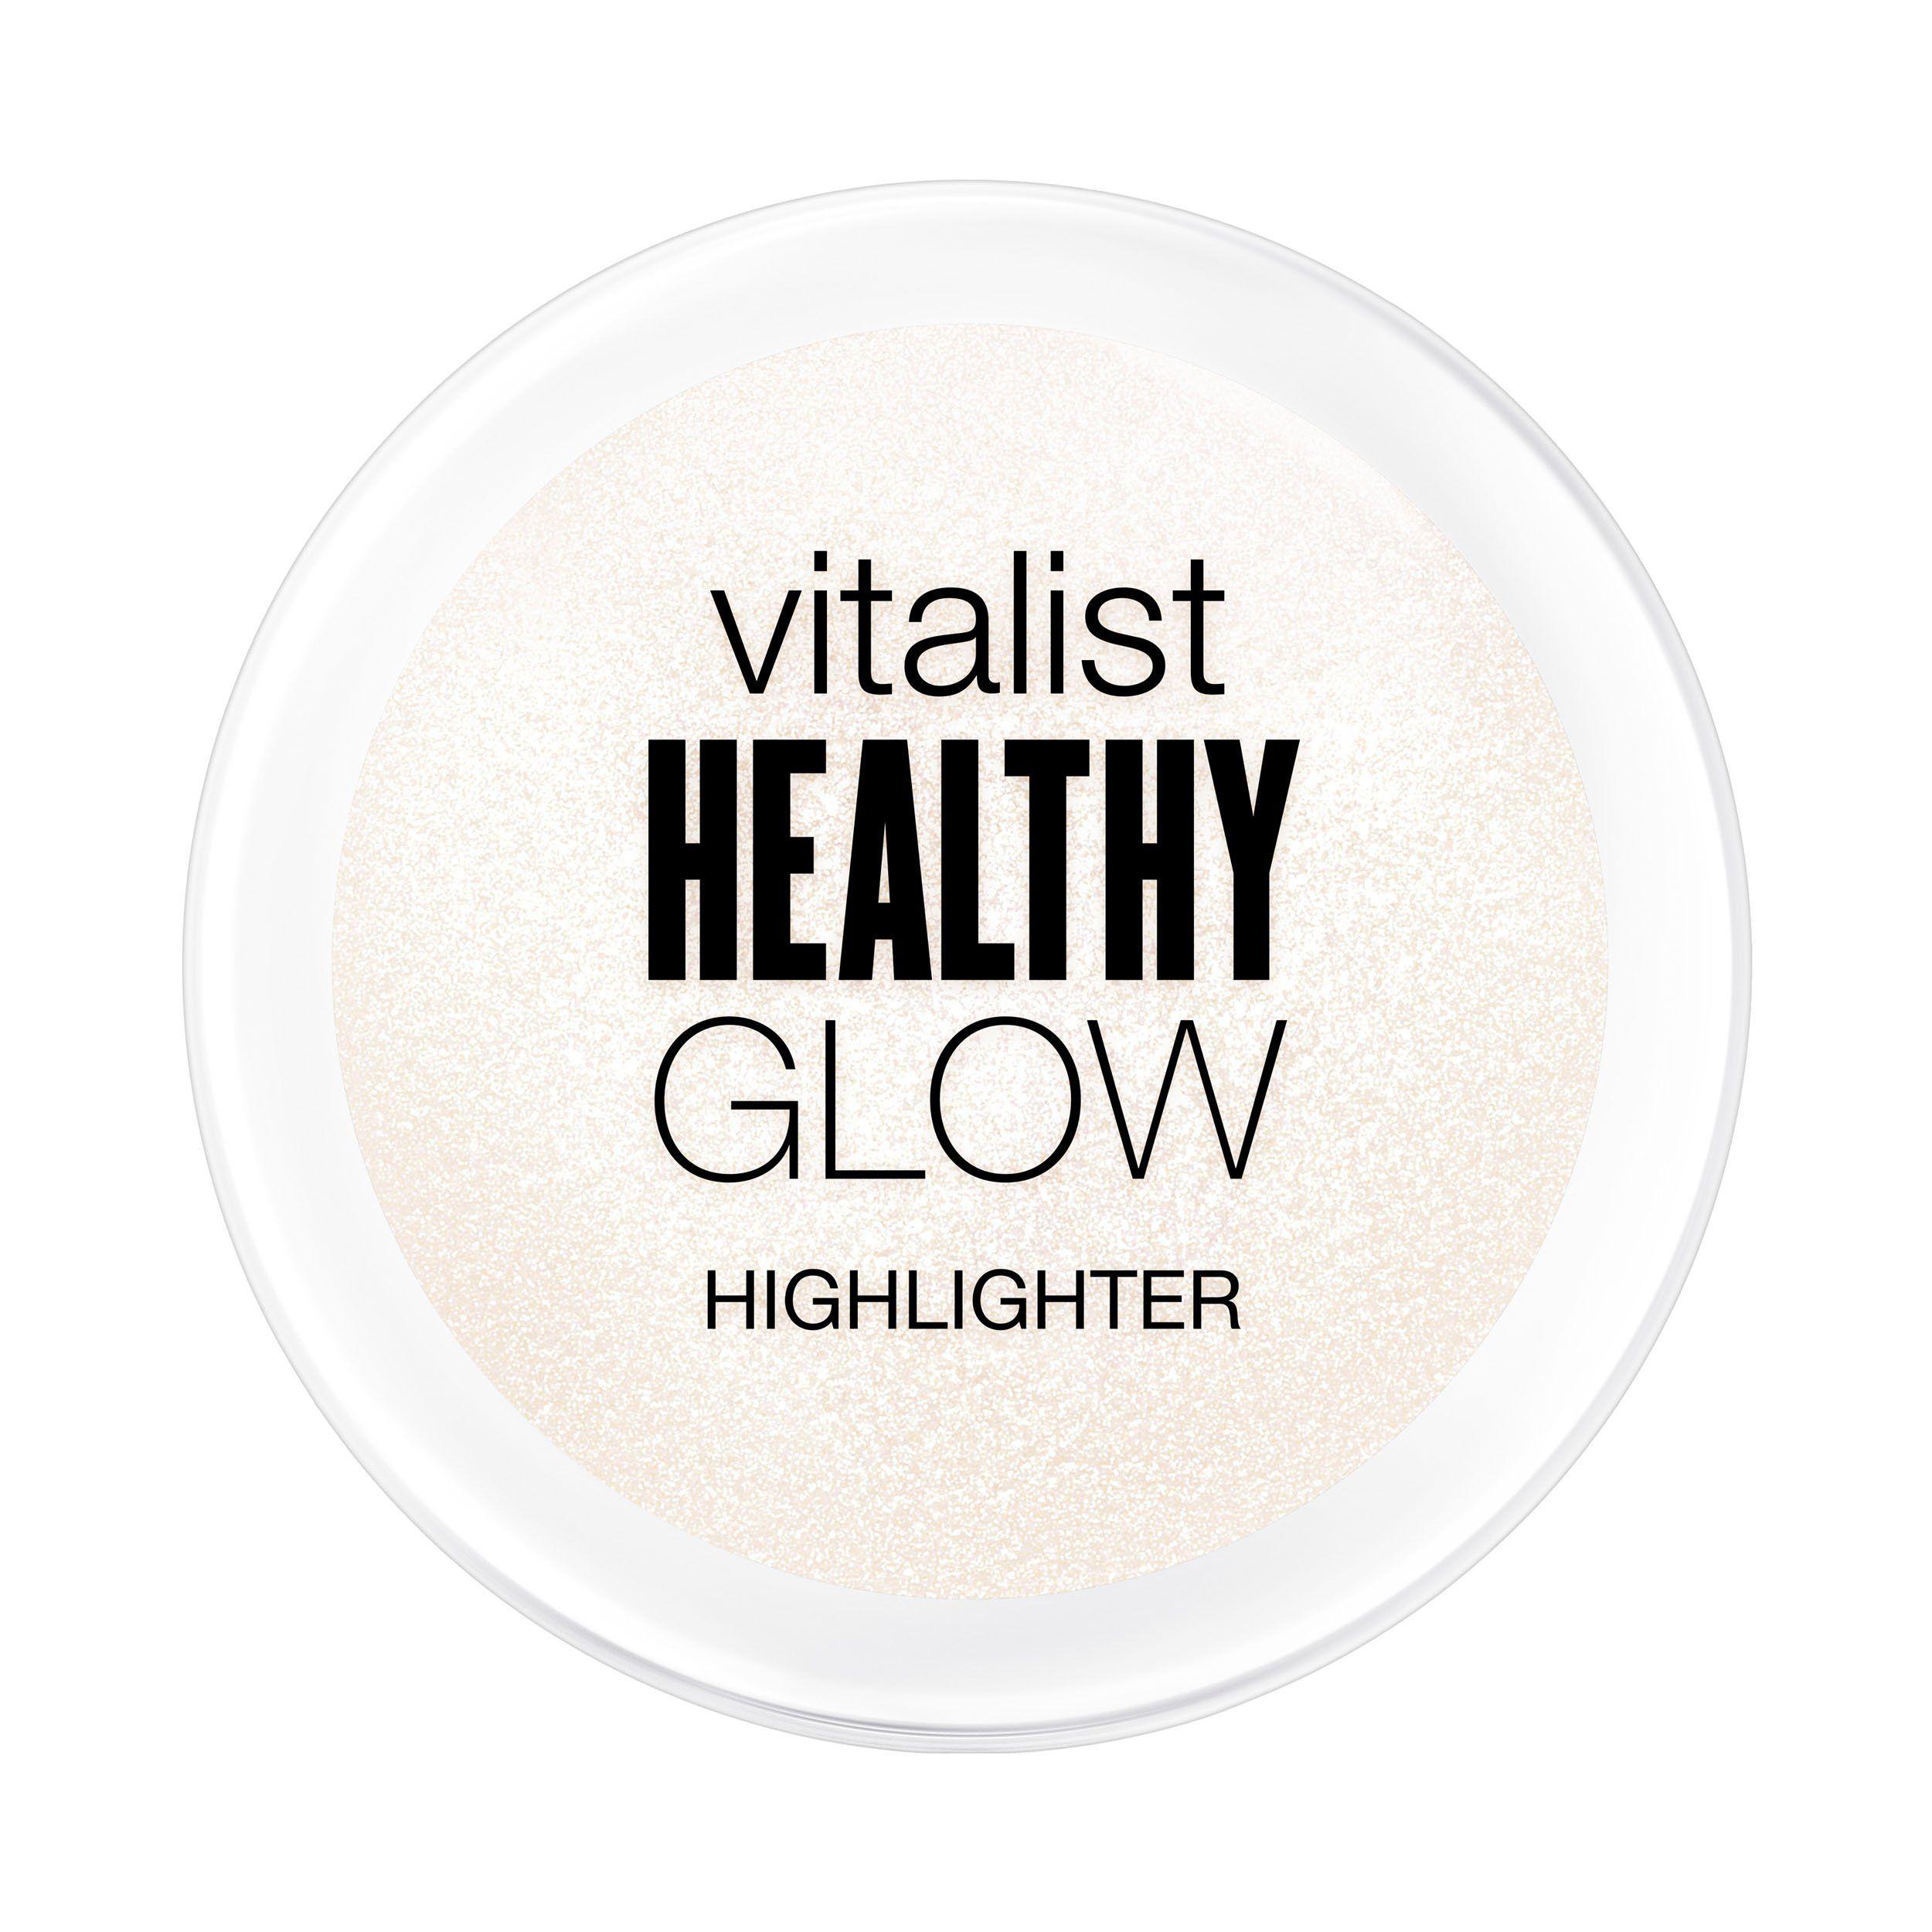 Covergirl Logo - Amazon.com: COVERGIRL Vitalist Healthy Glow Highlighter, Starshine ...